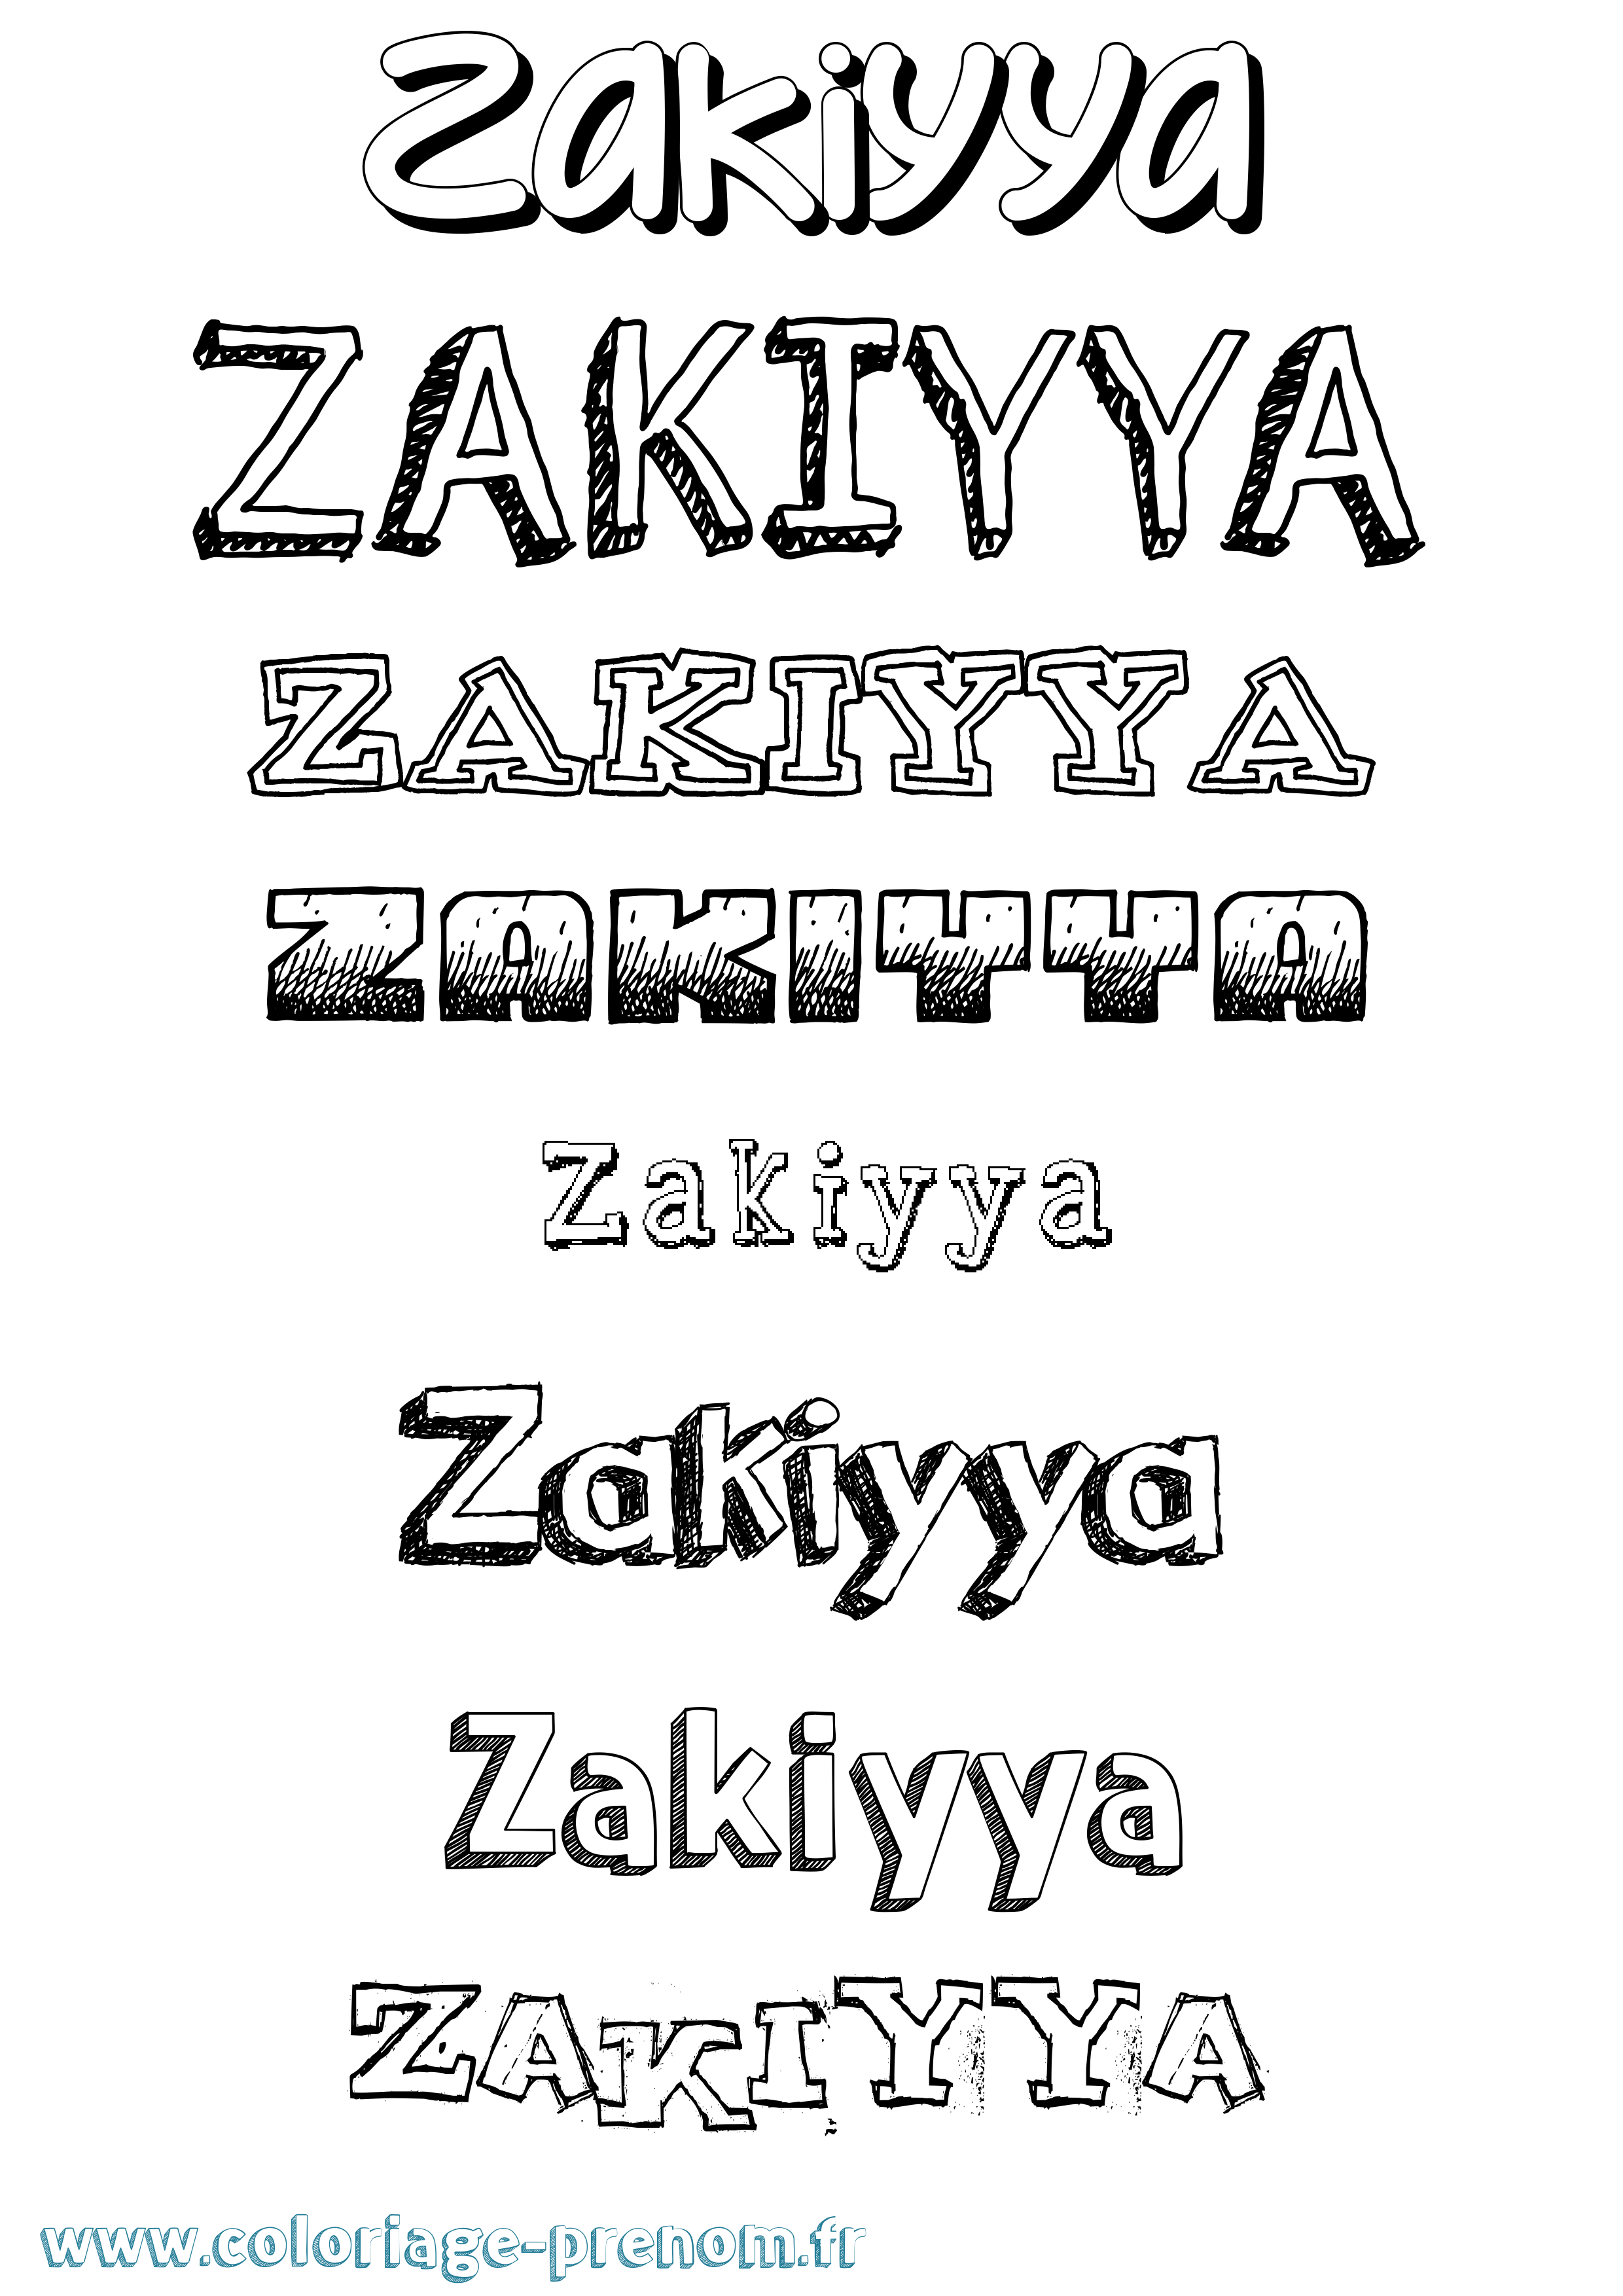 Coloriage prénom Zakiyya Dessiné